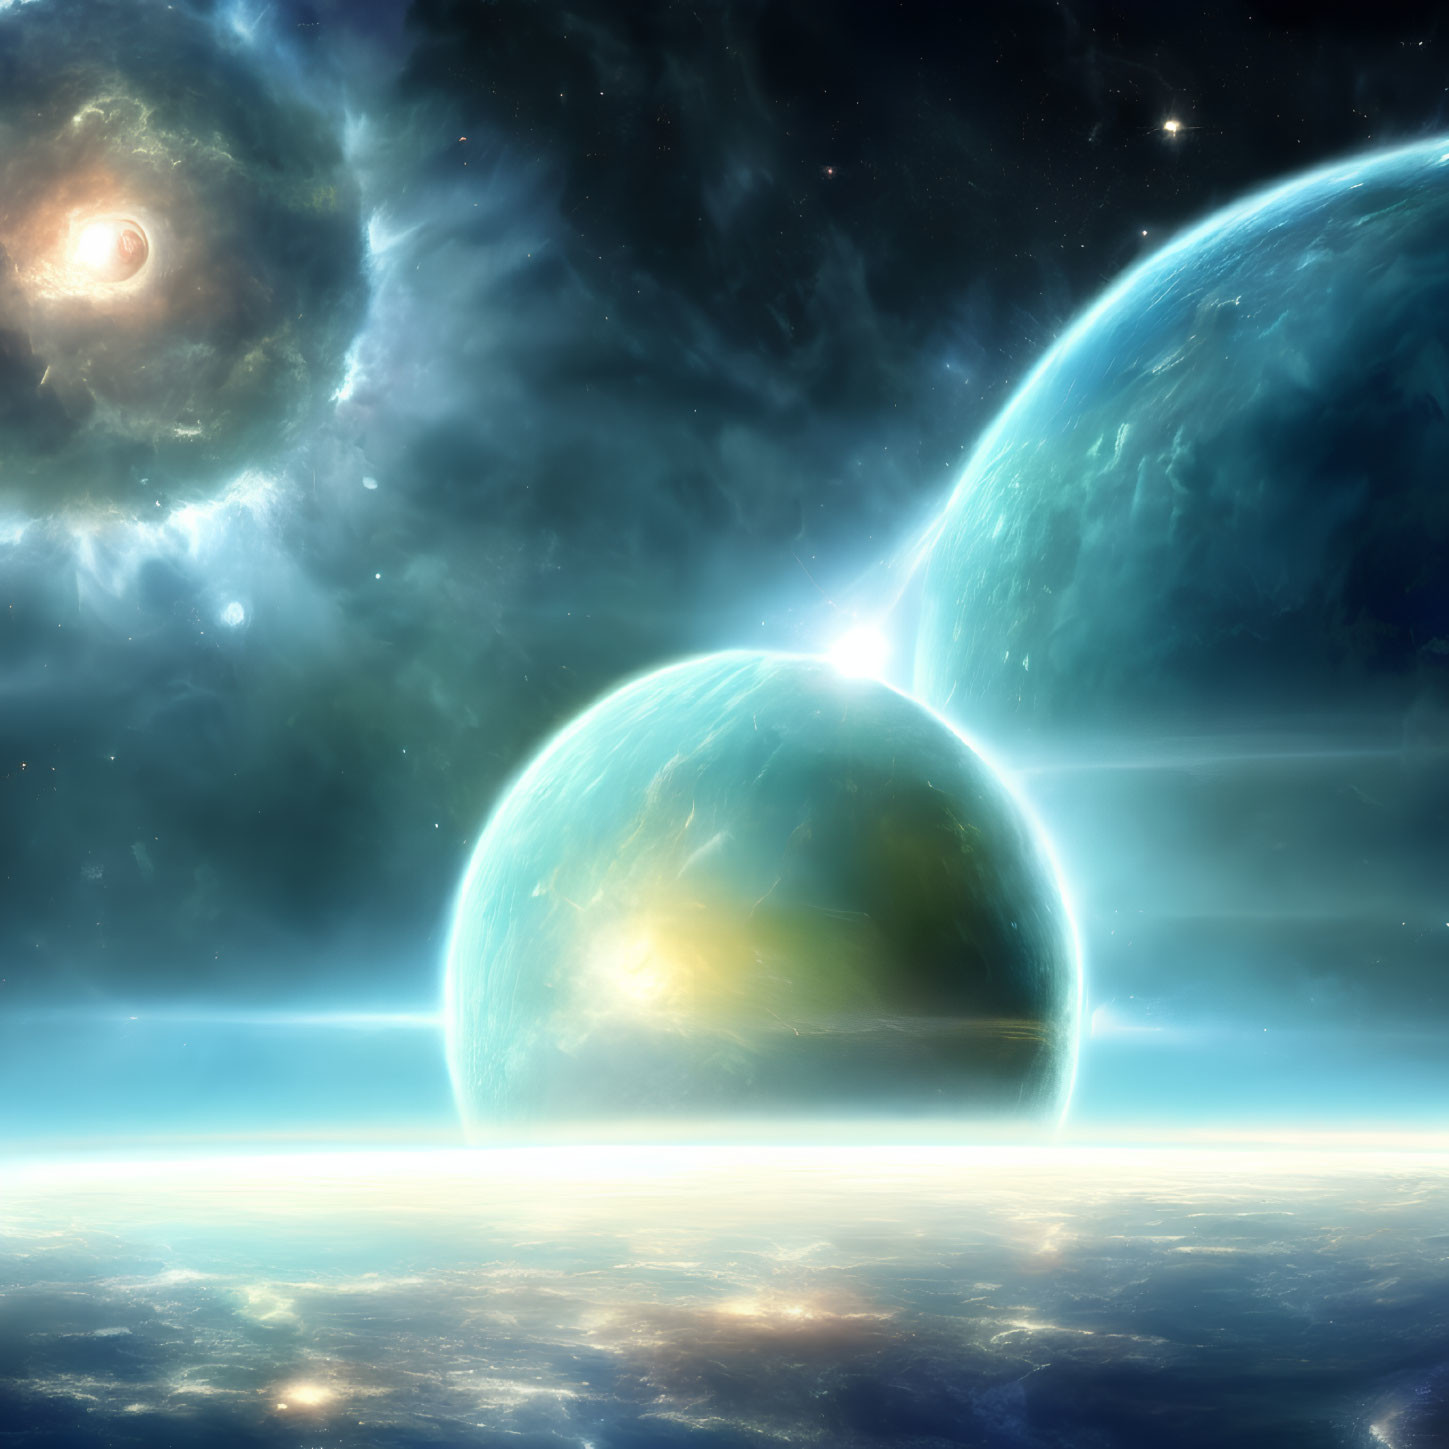 Three Radiant Planets Aligned in Cosmic Scene